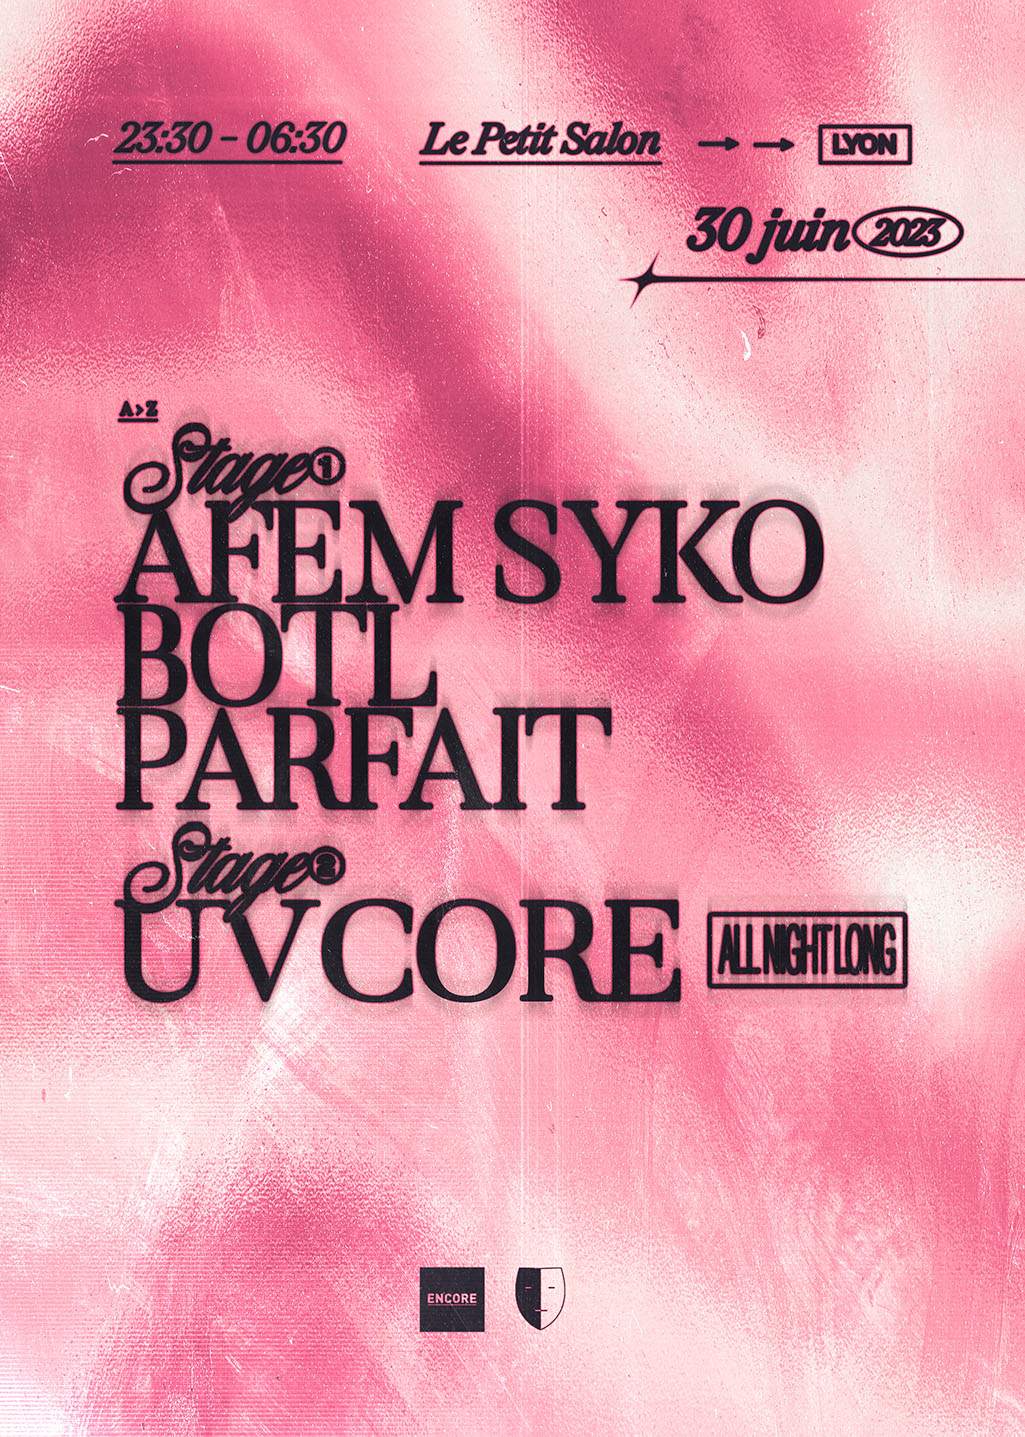 ENCORE: Parfait, Afem Syko, Botl & UVCORE all night long - フライヤー表